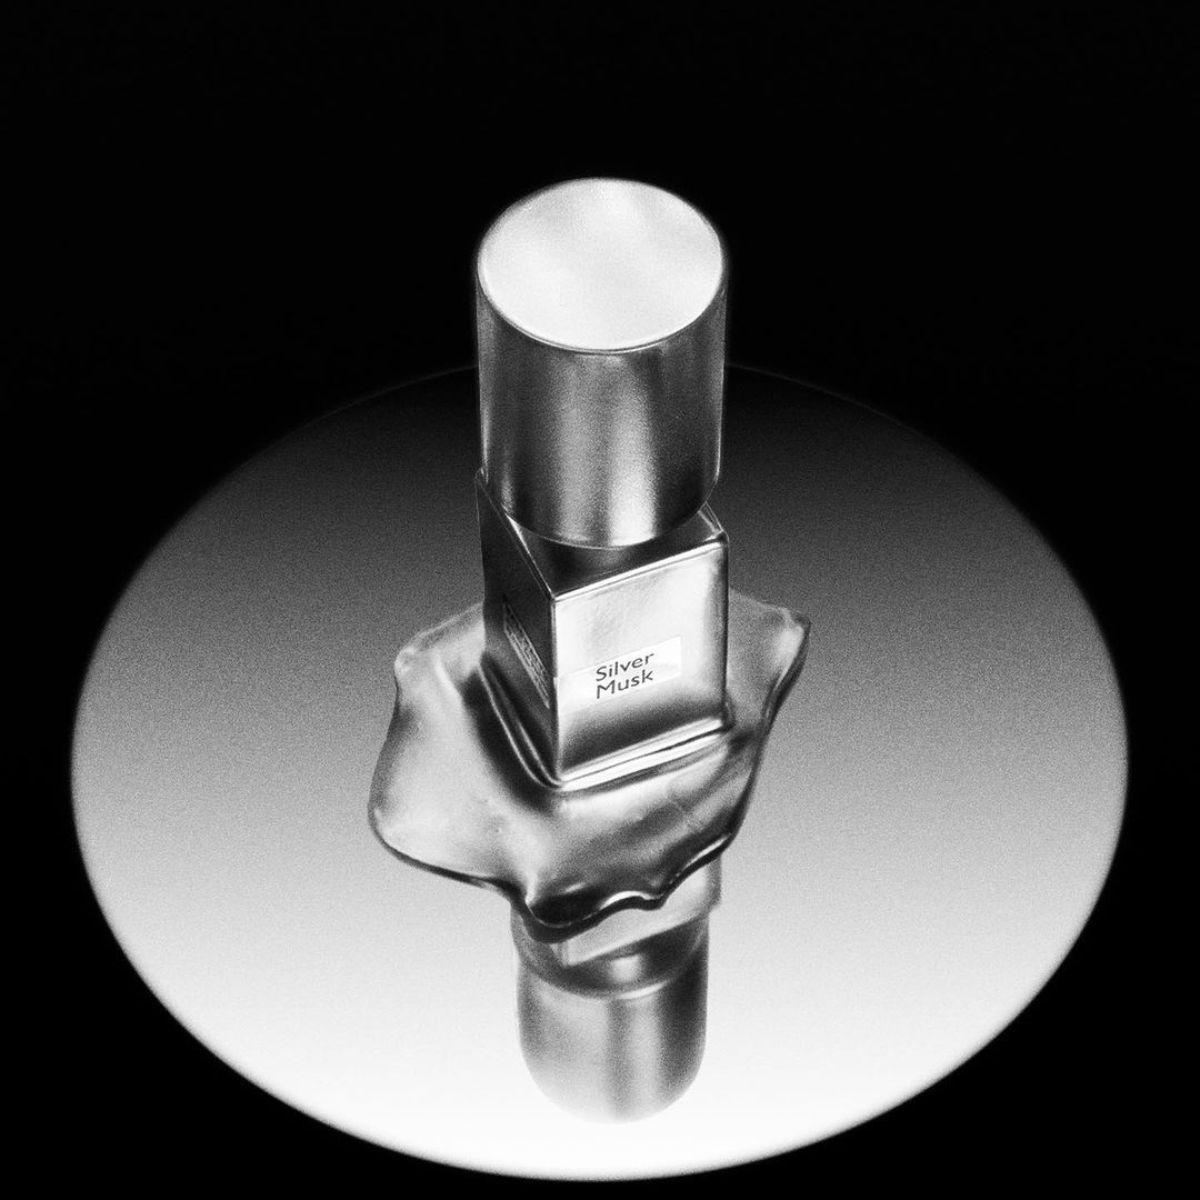 Nasomatto - Silver Musk Extrait de Parfum 30 ml